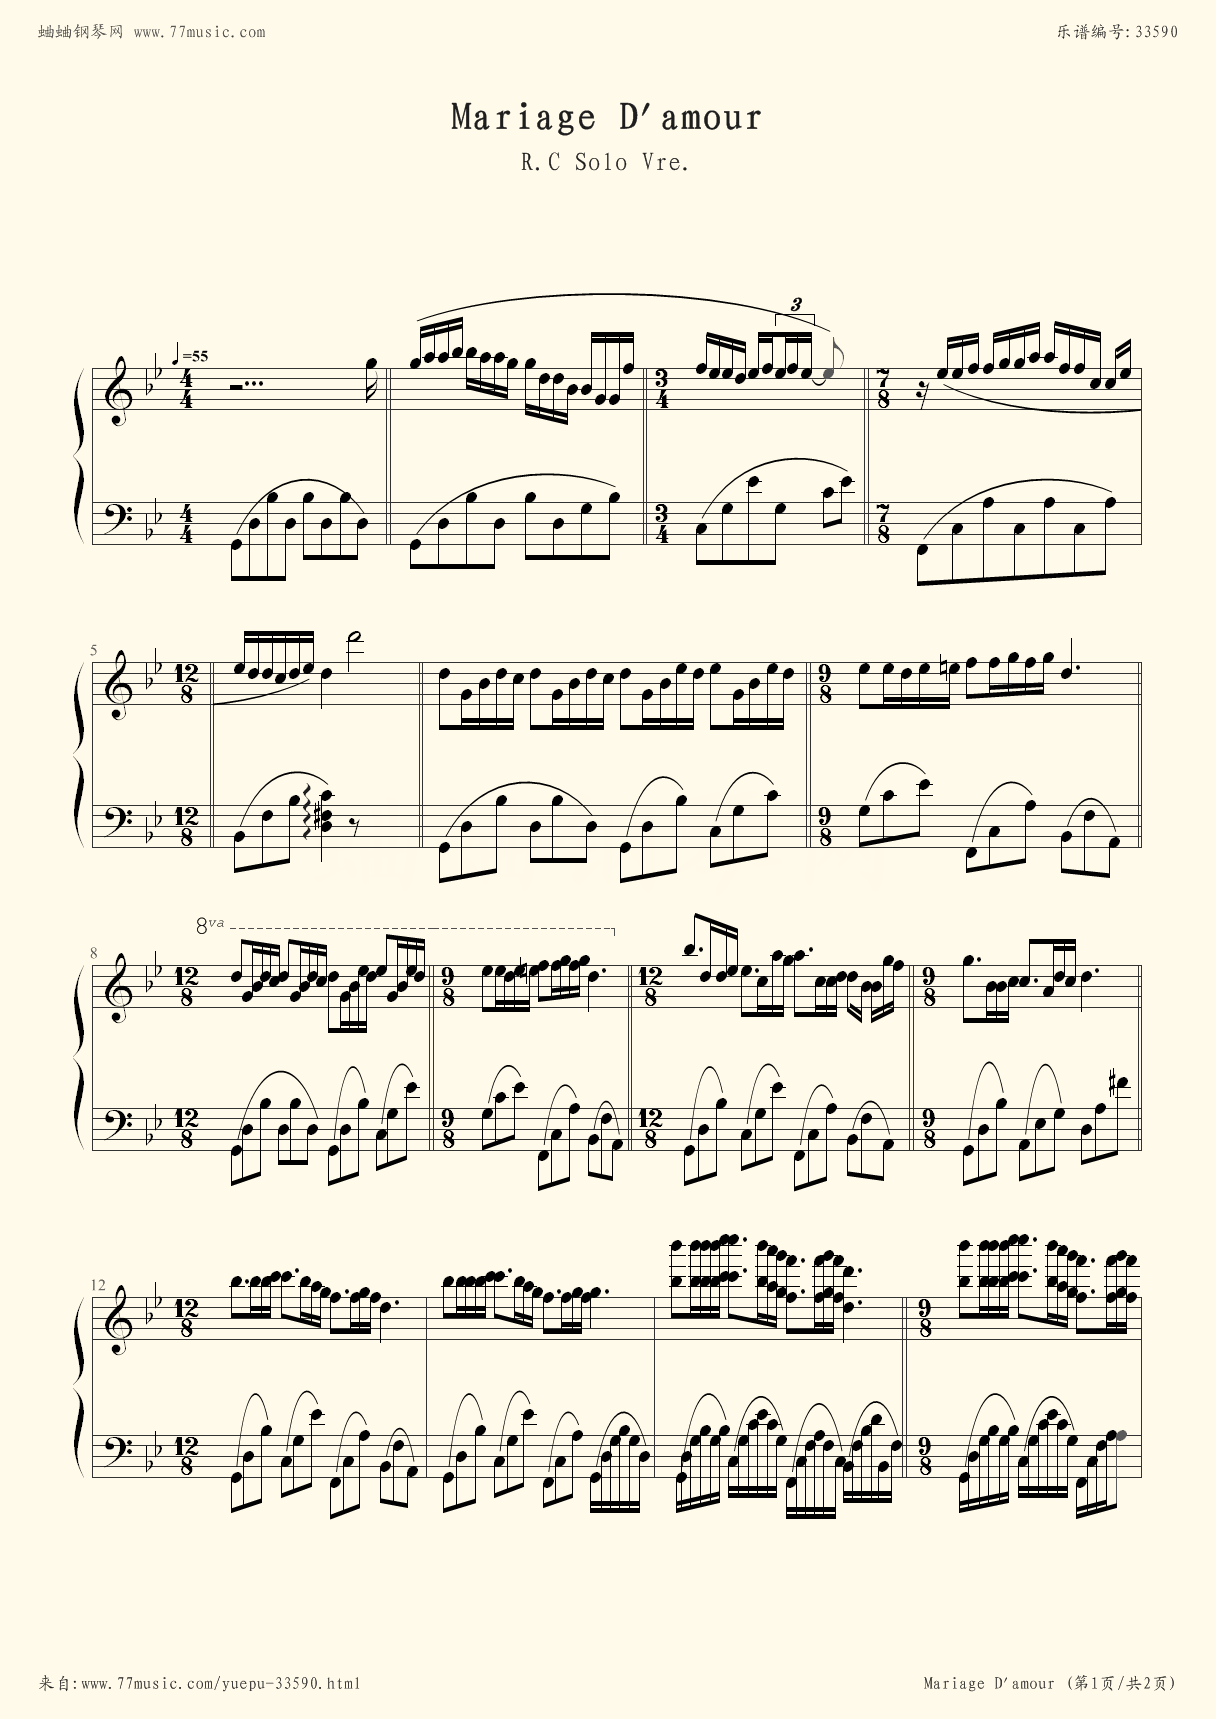 Mariage d'Amour - Richard Clayderman - Flash Version2 Piano Sheet Music Free